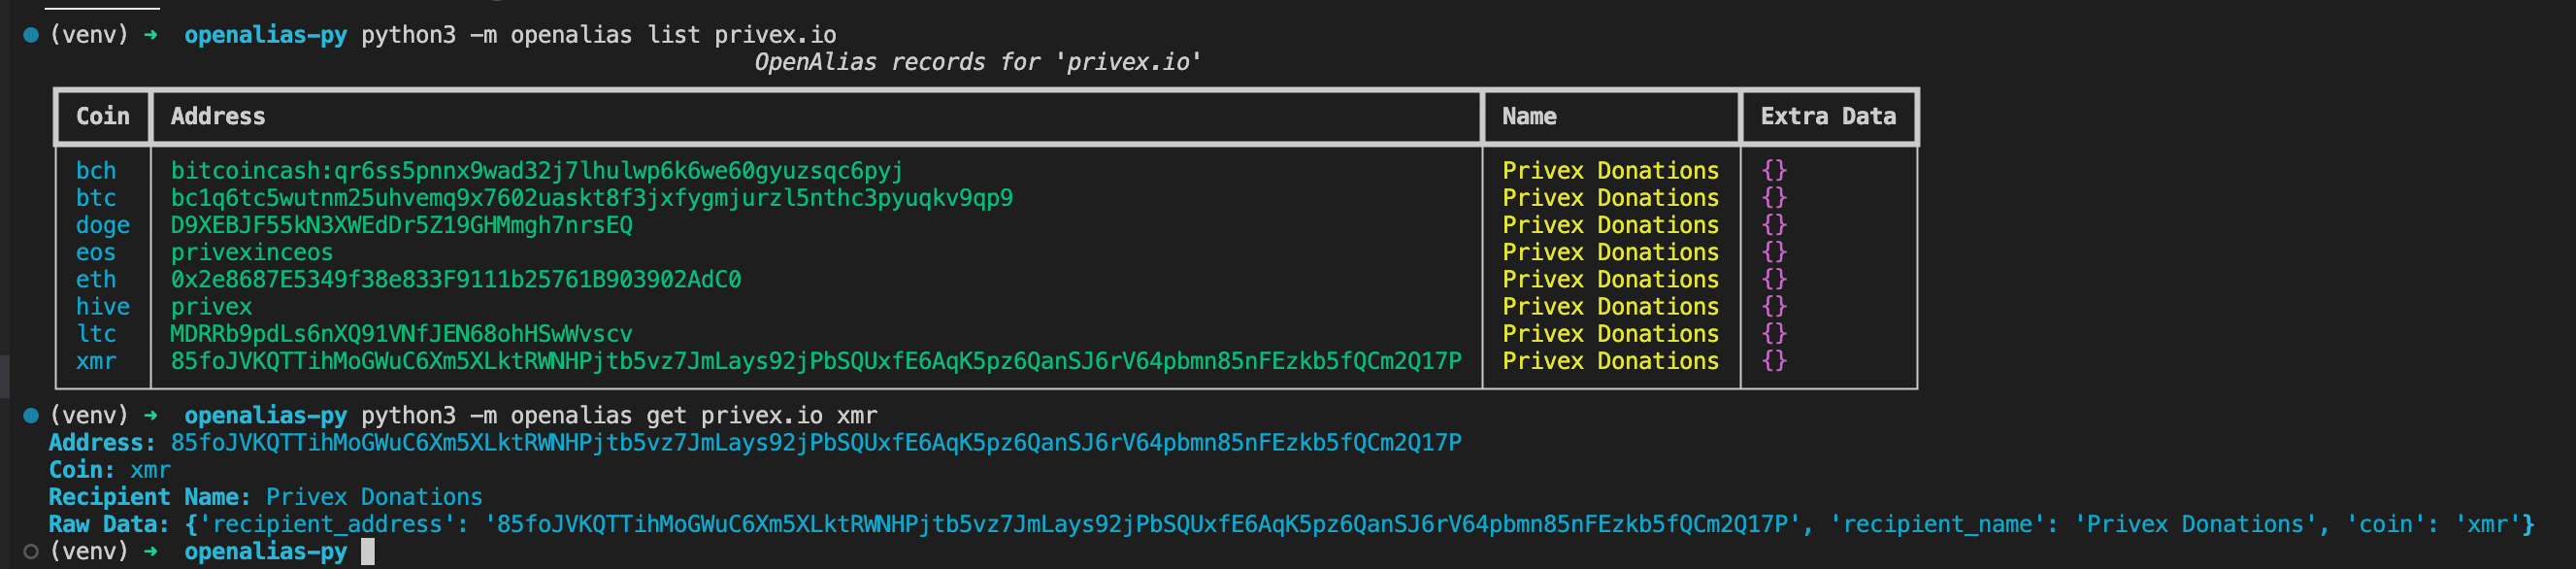 Screenshot of OpenAlias.py commands